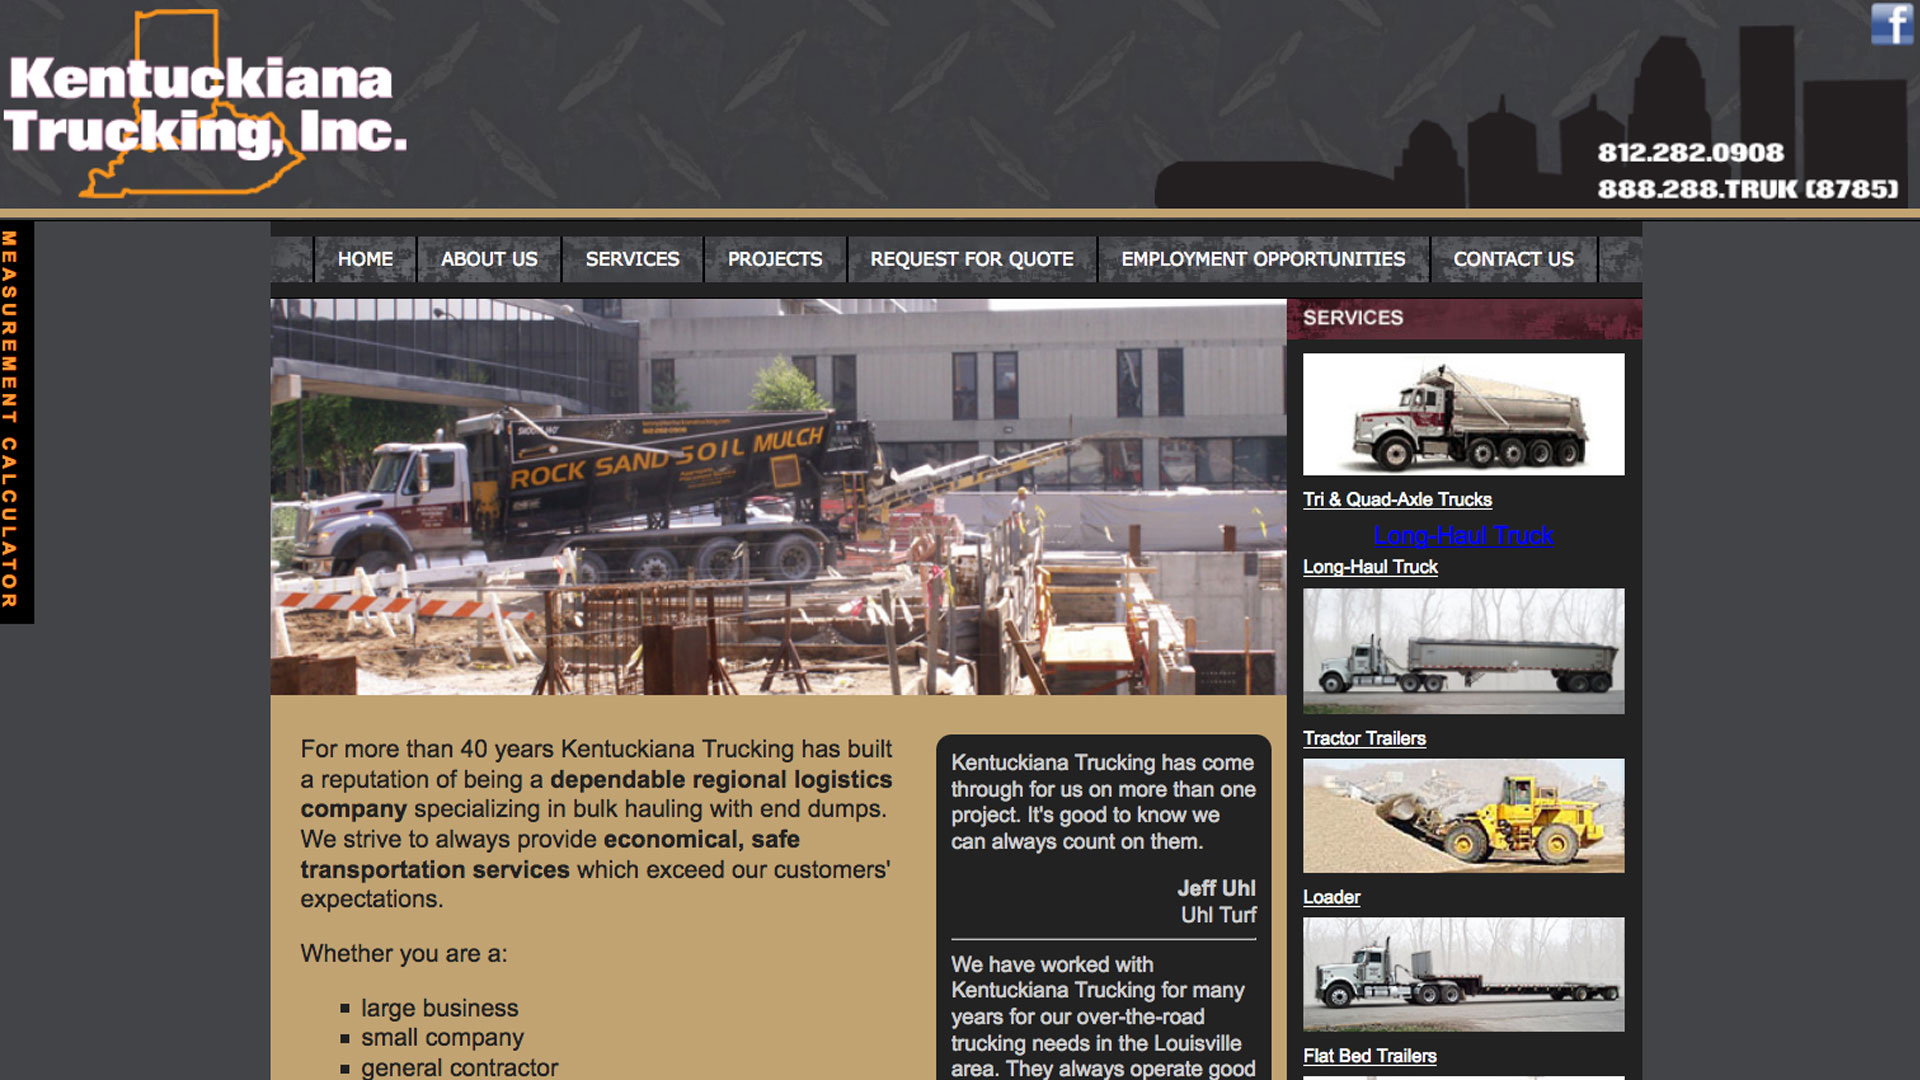 Kentuckiana Trucking website home page image